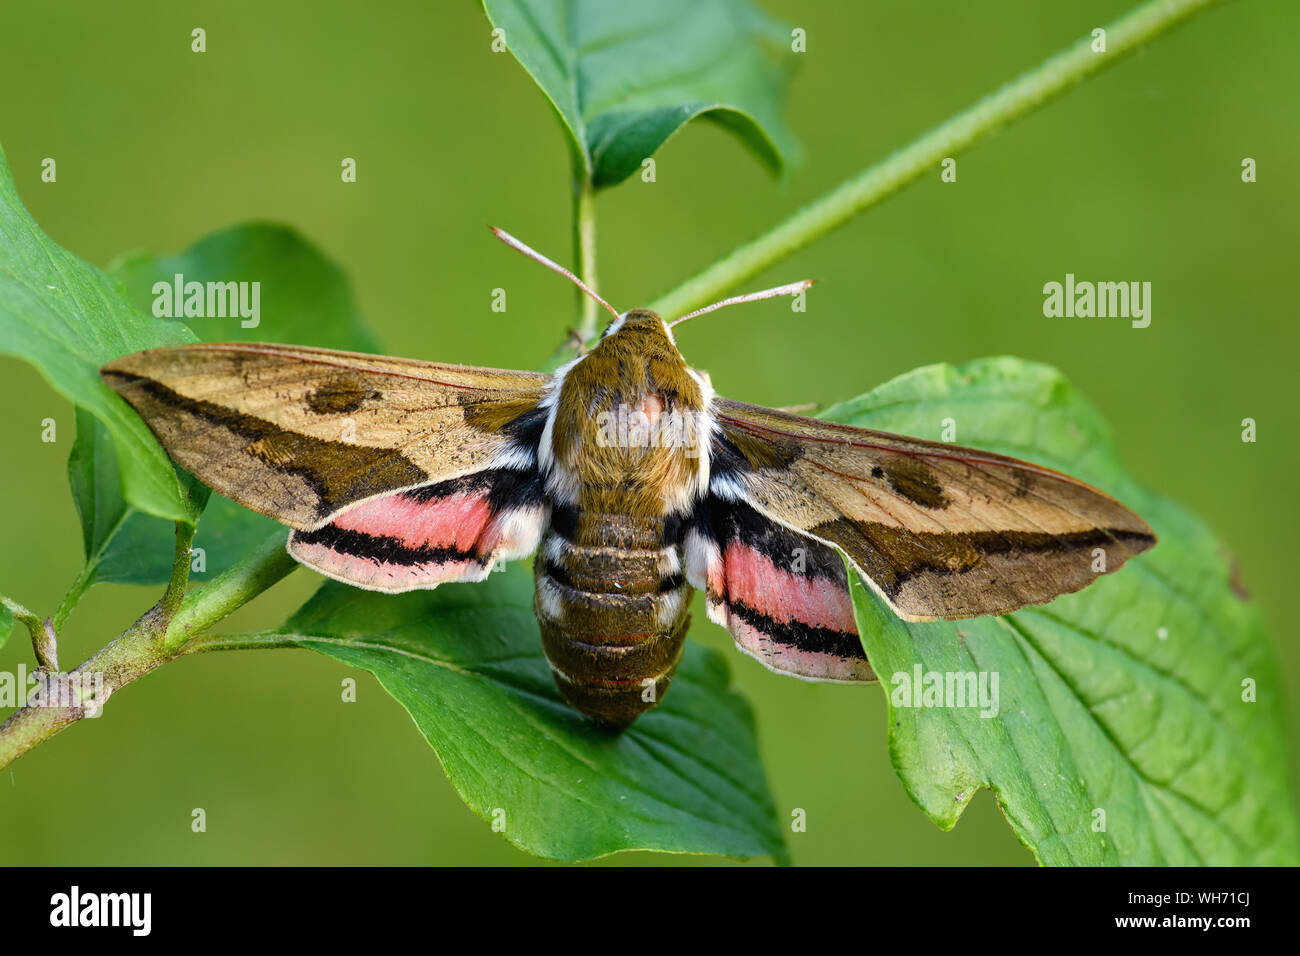 https://c8.alamy.com/comp/WH71CJ/spurge-hawk-moth-hyles-euphorbiae-beautiful-colored-hawk-moth-from-european-woodlands-czech-republic-WH71CJ.jpg